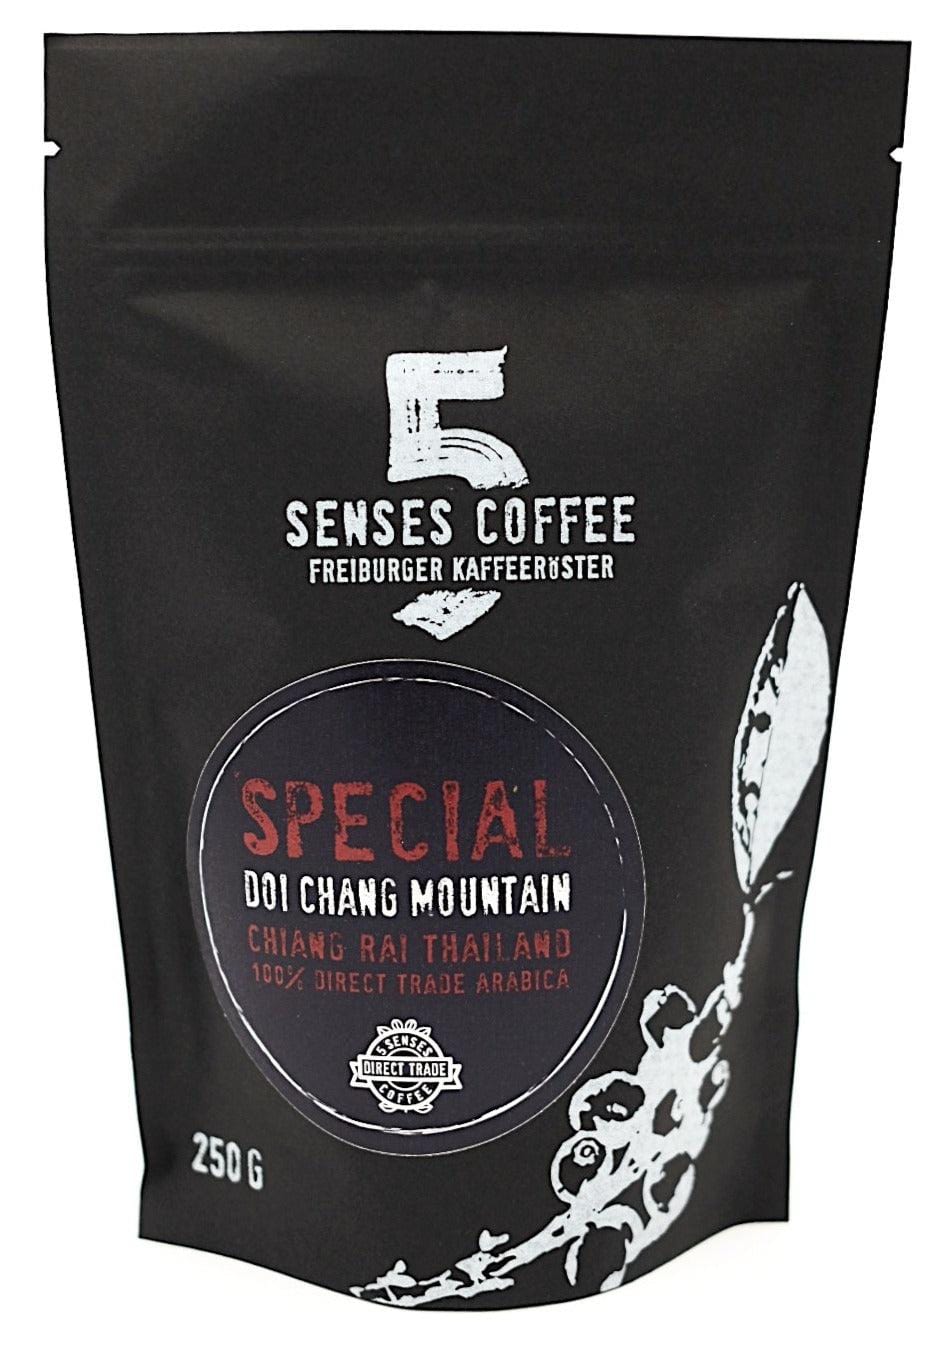 5 SENSES SPECIAL DOI CHANG THAILAND ESPRESSO 5 Senses Coffee